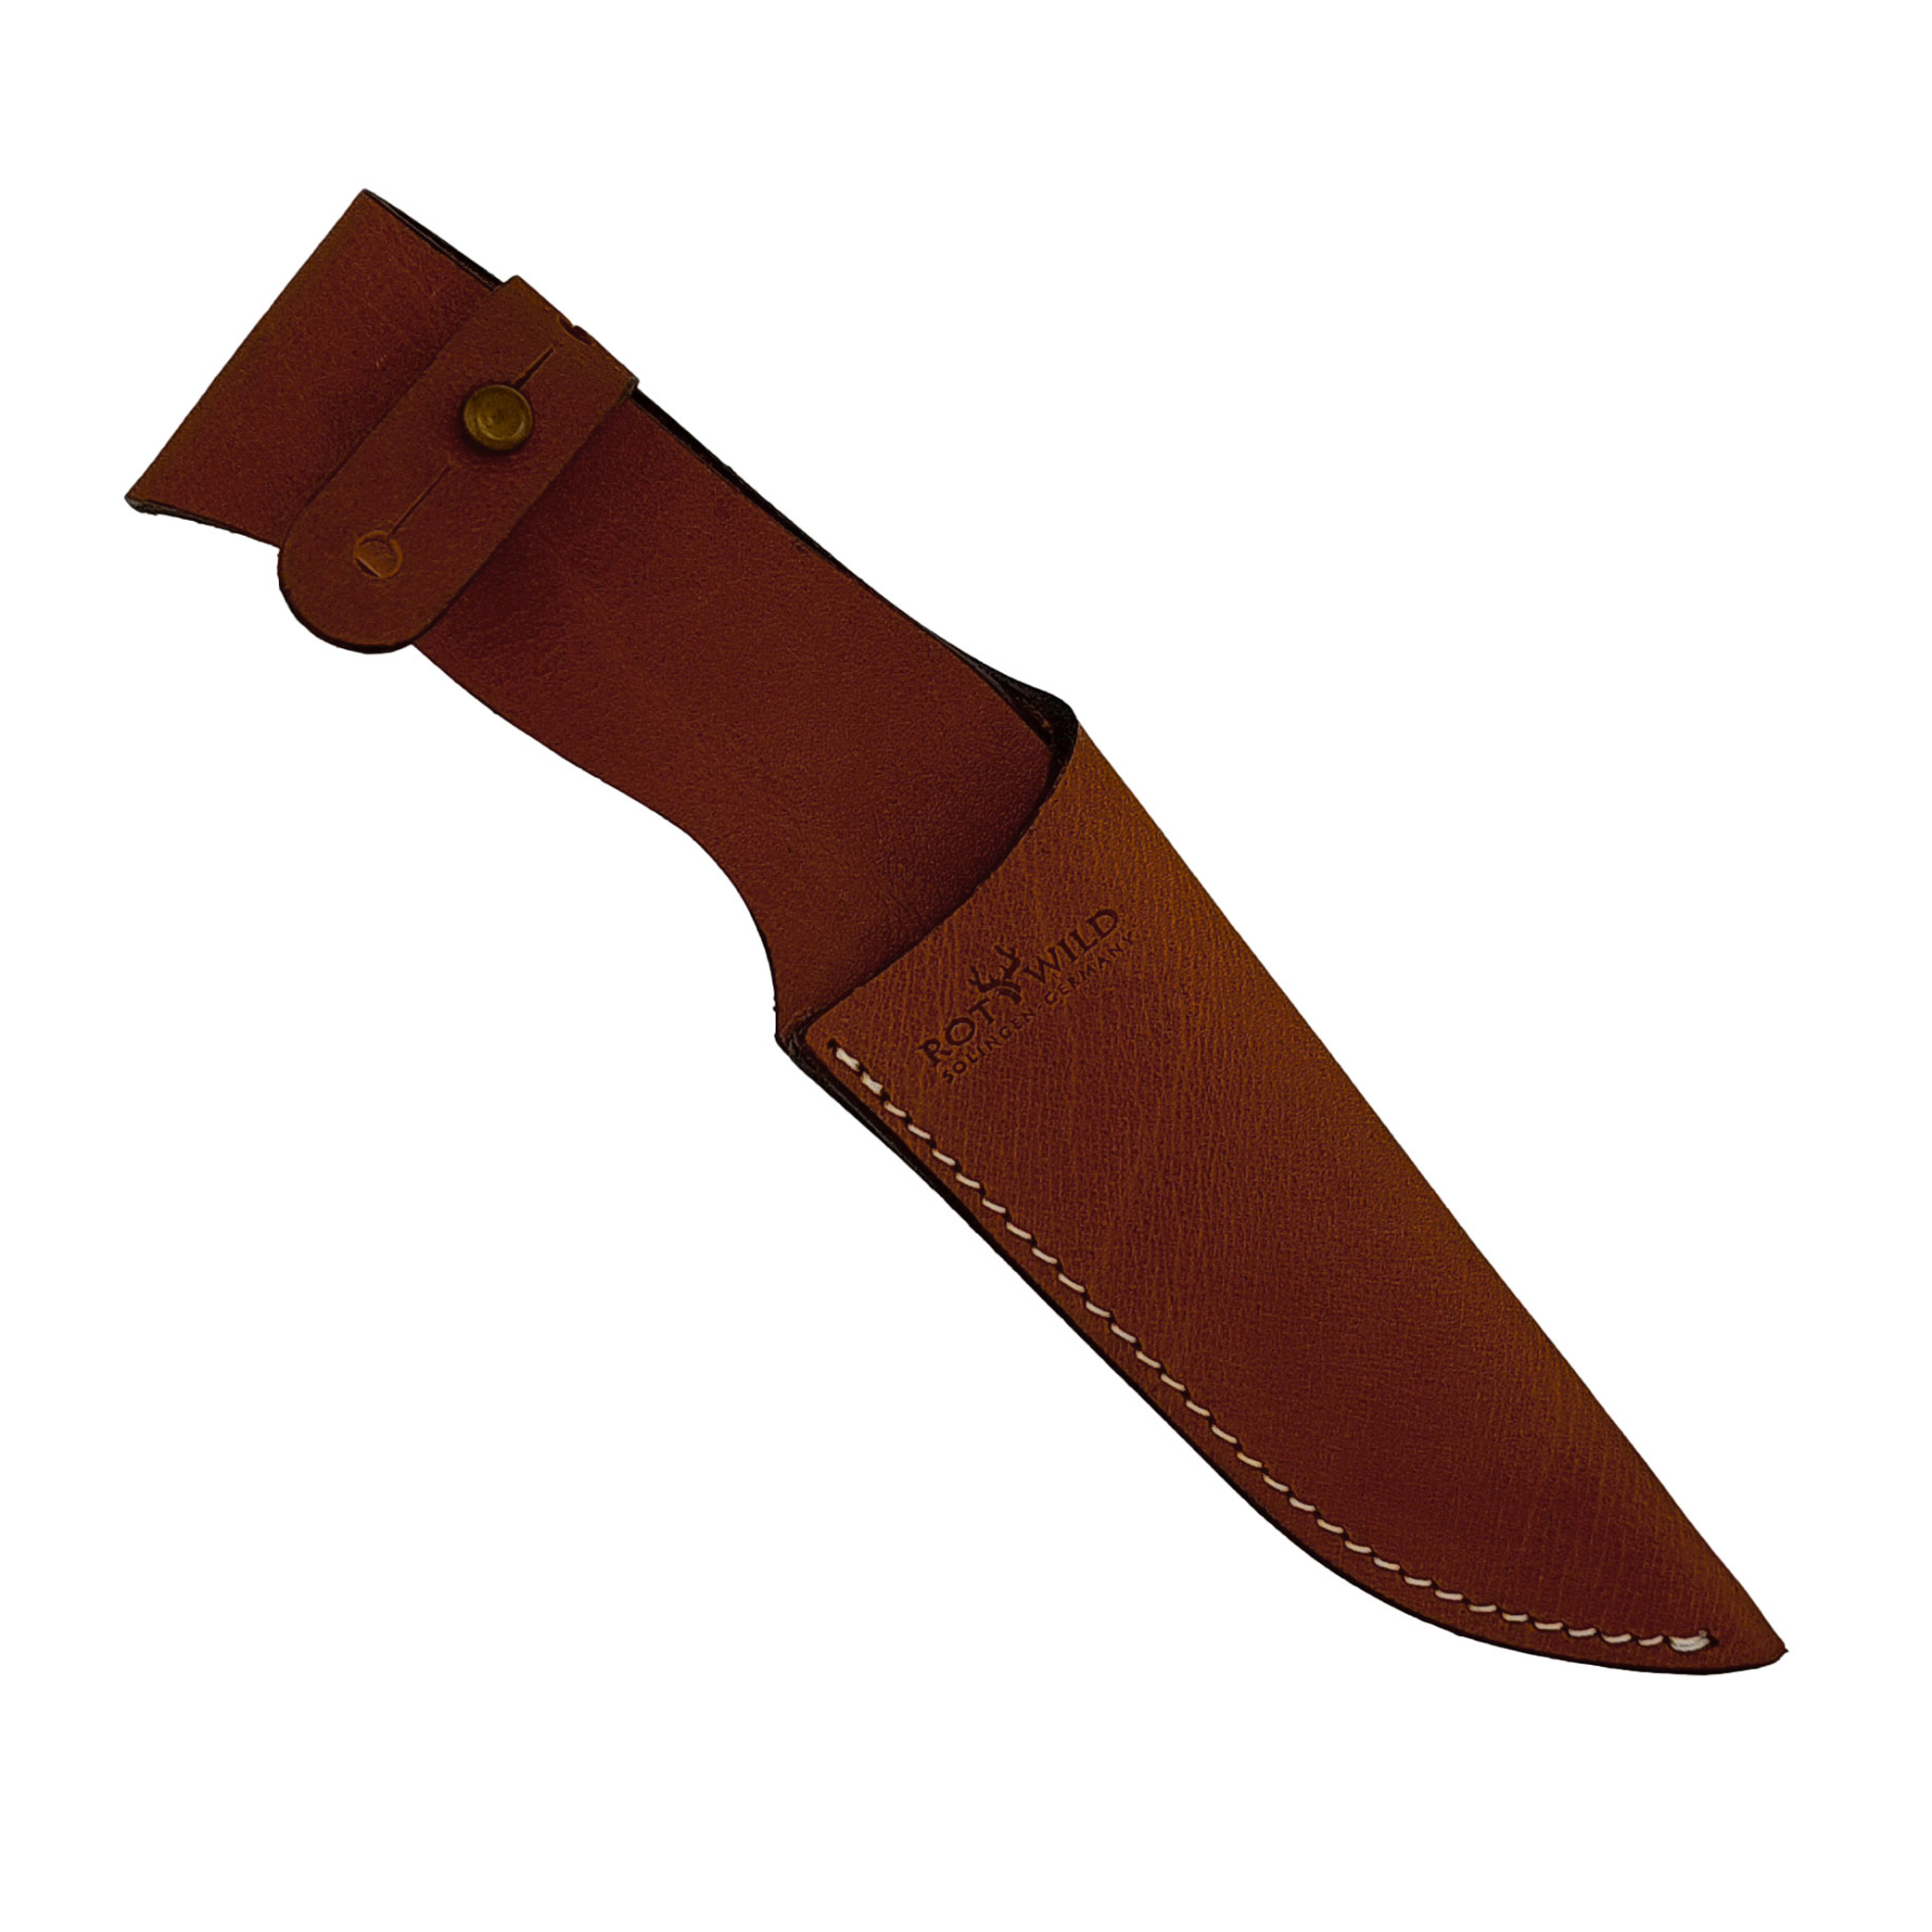 Hunting and outdoor knife "Falke" micarta black